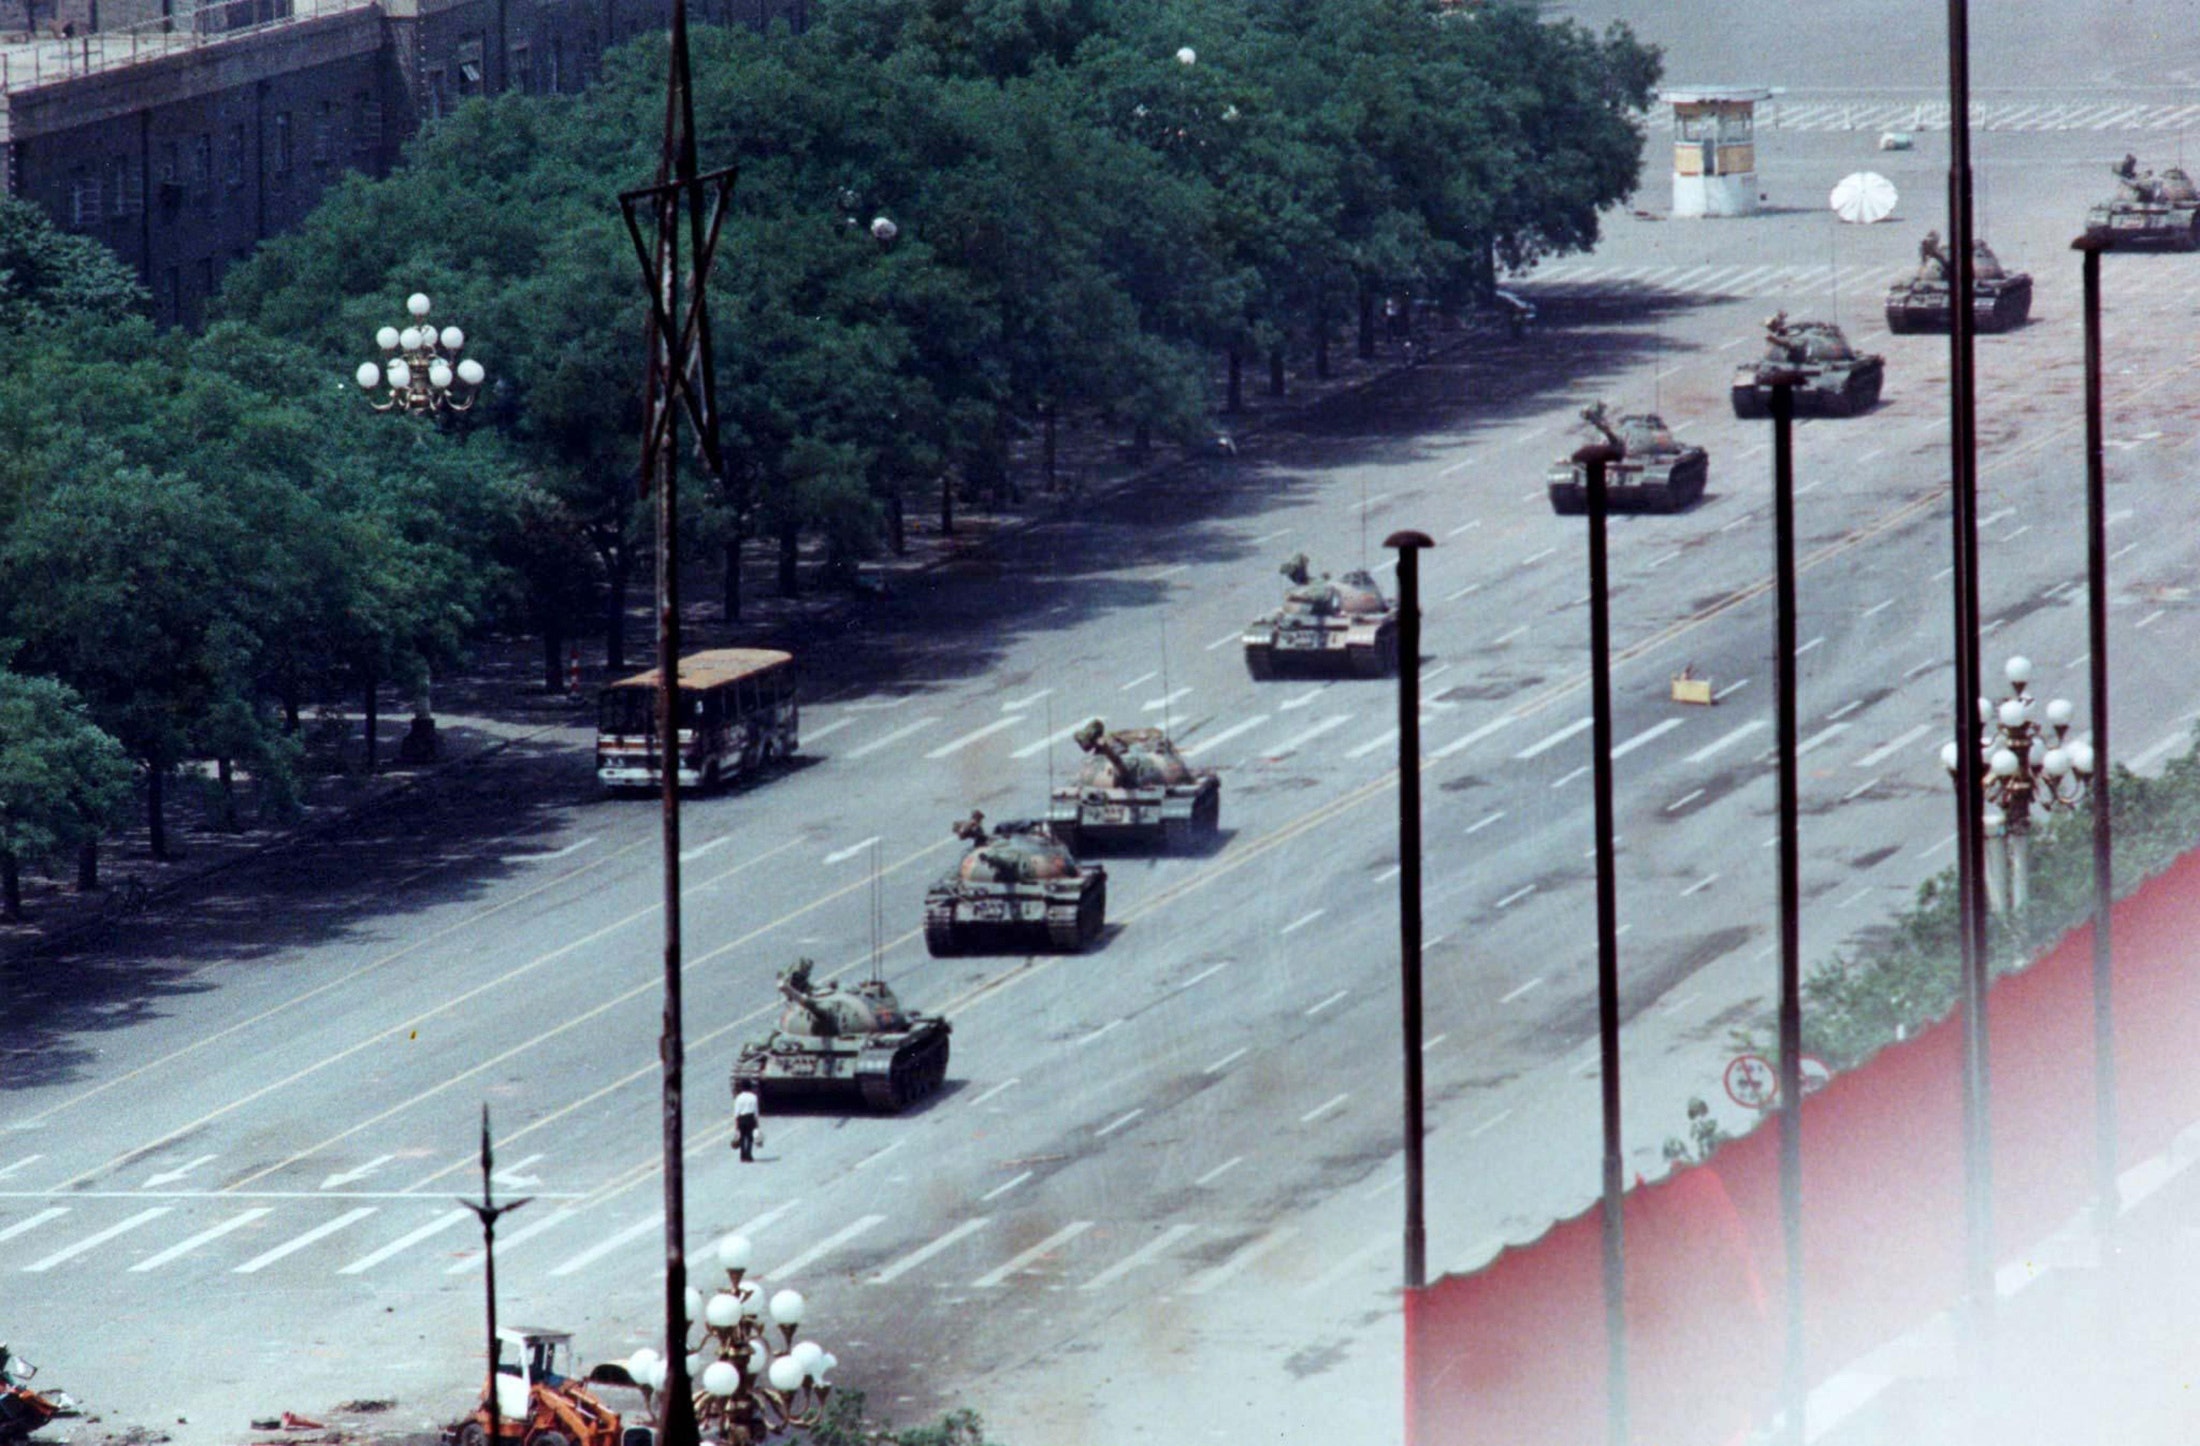 тяньаньмэнь 1989 площадь